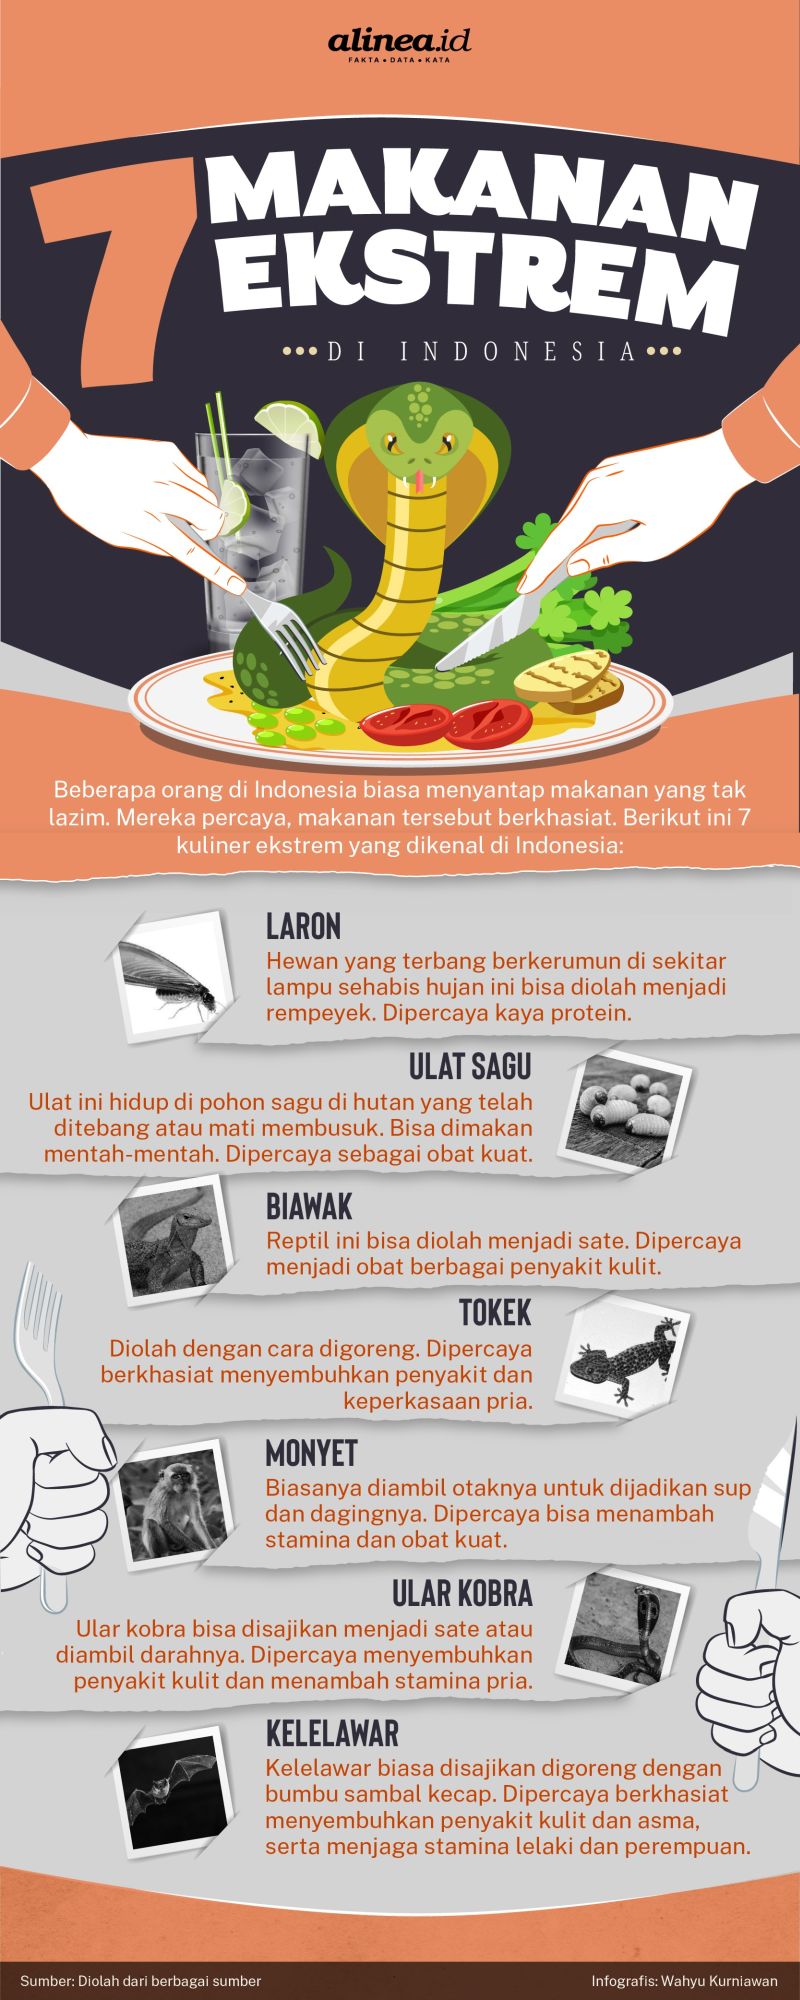 Infografik makanan ekstrem. Alinea.id/Wahyu Kurniawan.